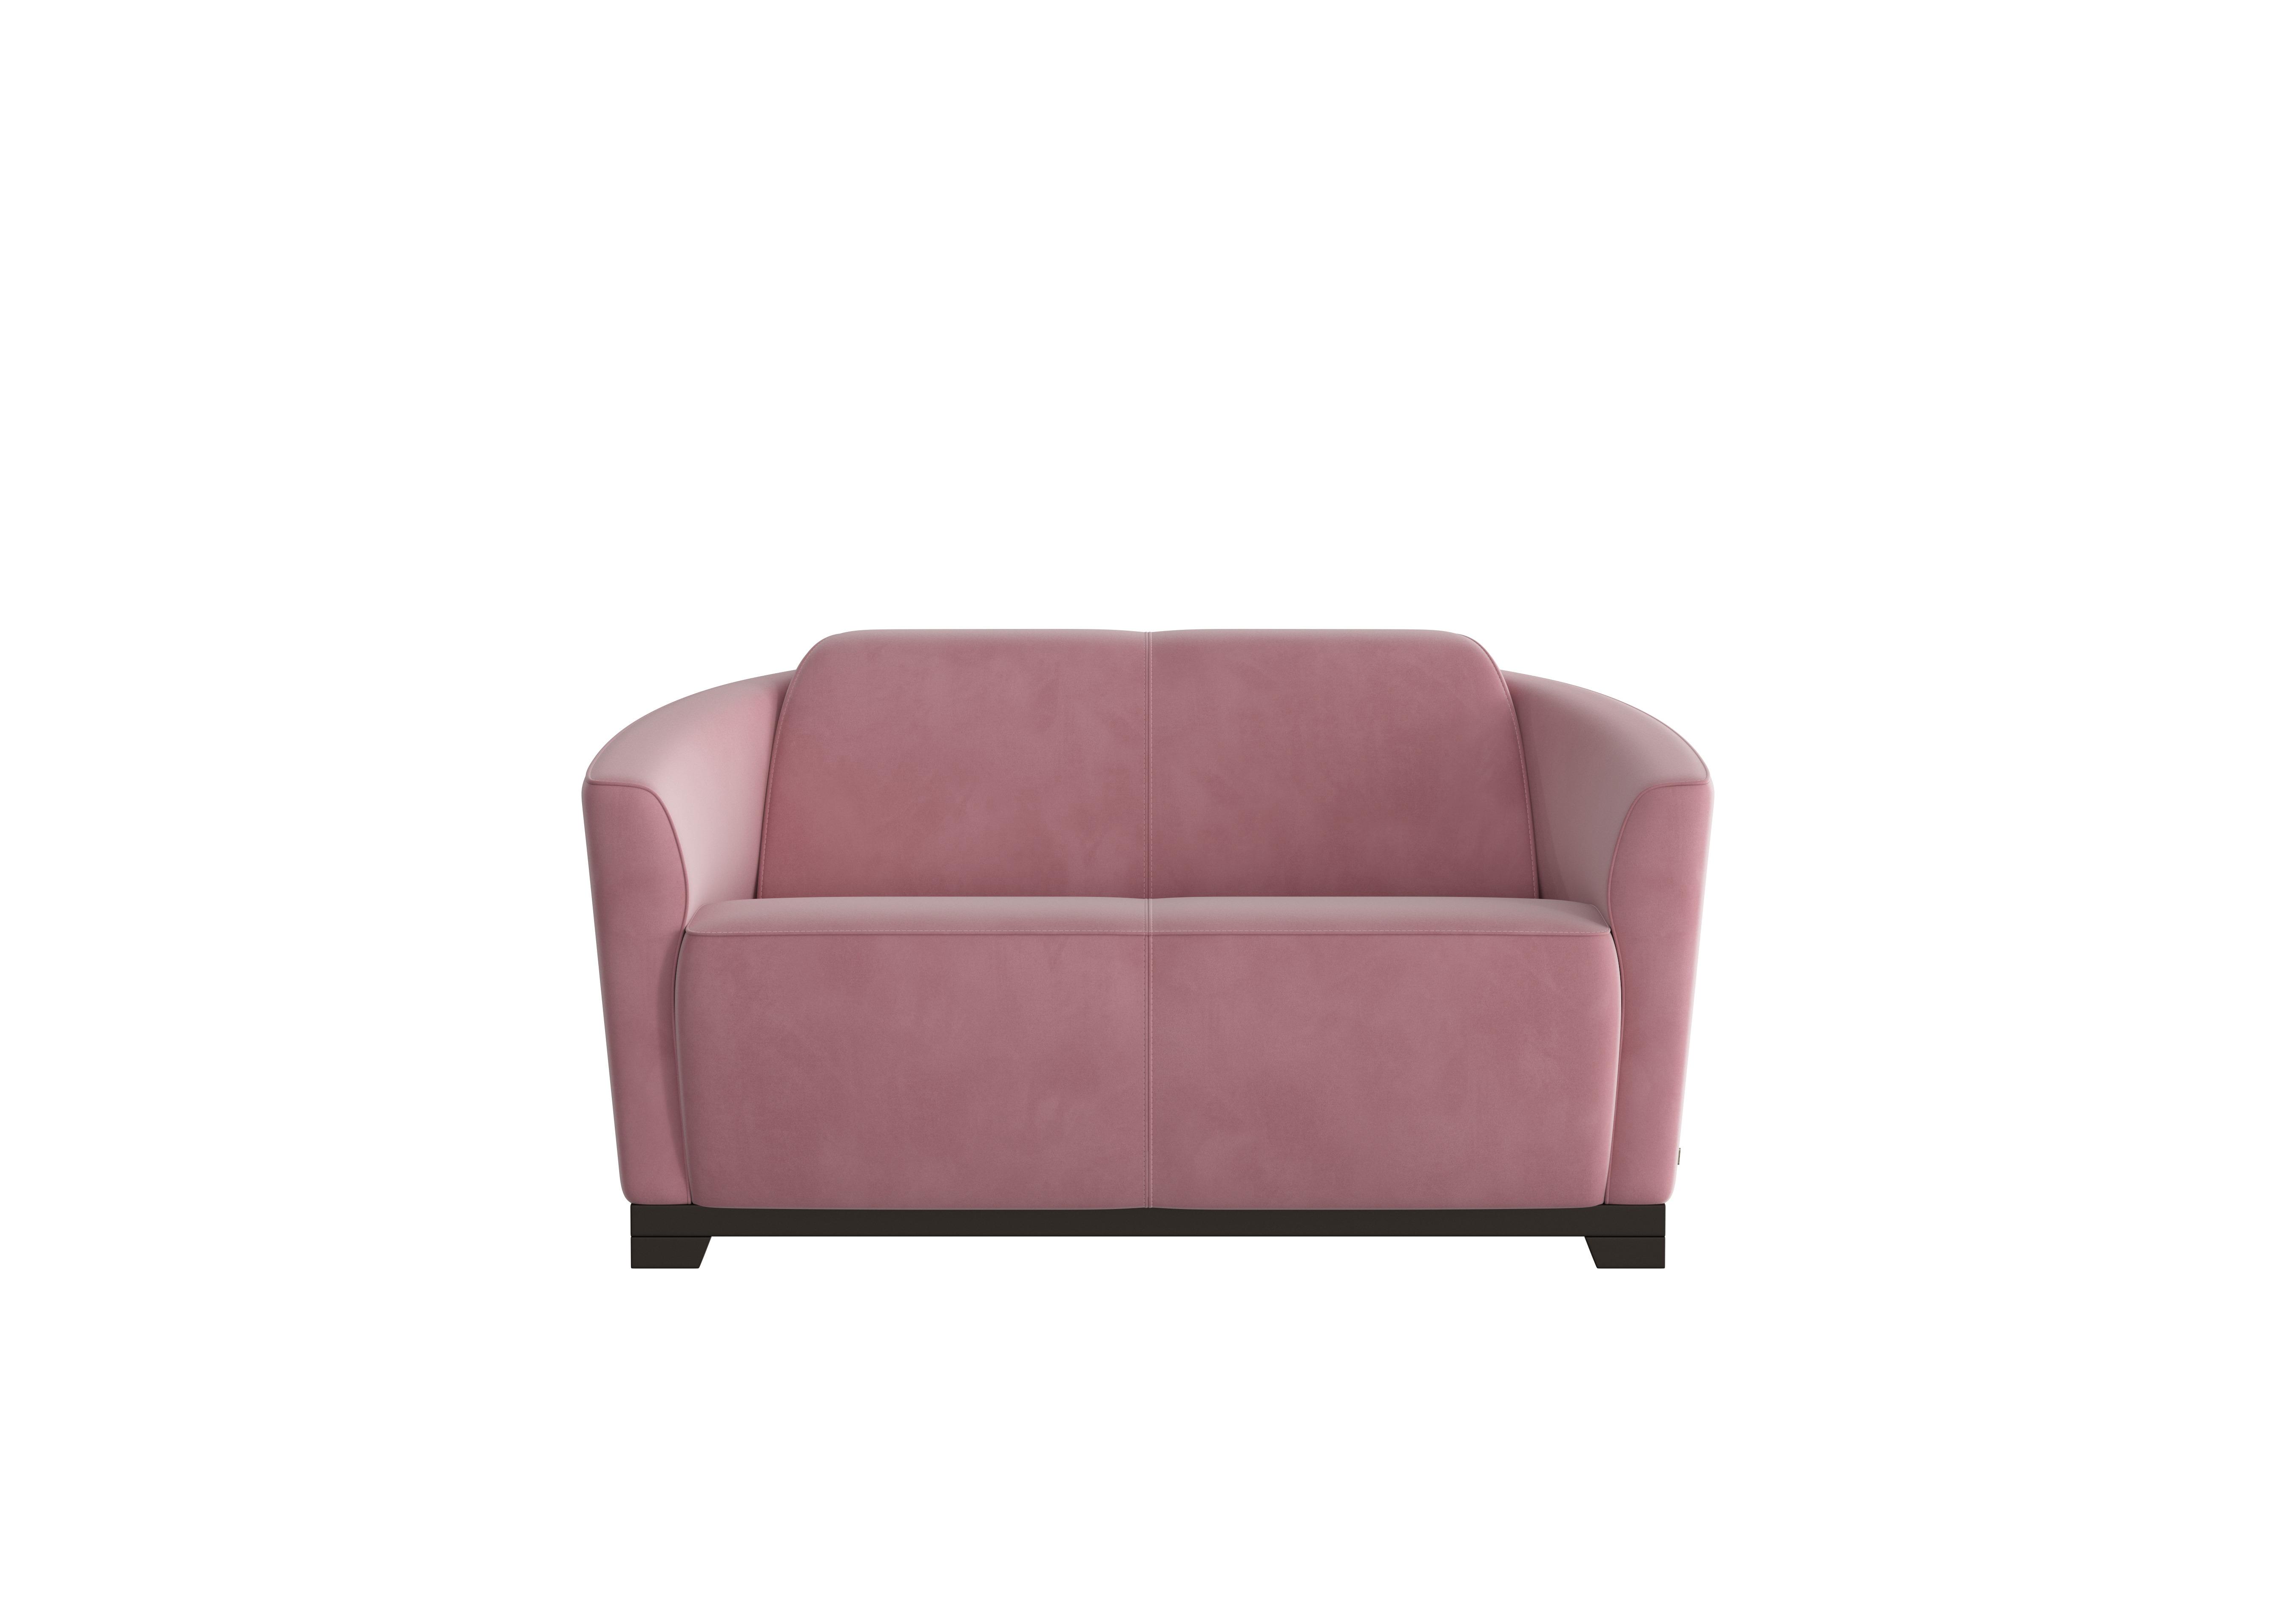 Ketty 2 Seater Fabric Sofa in Selma Rosa on Furniture Village